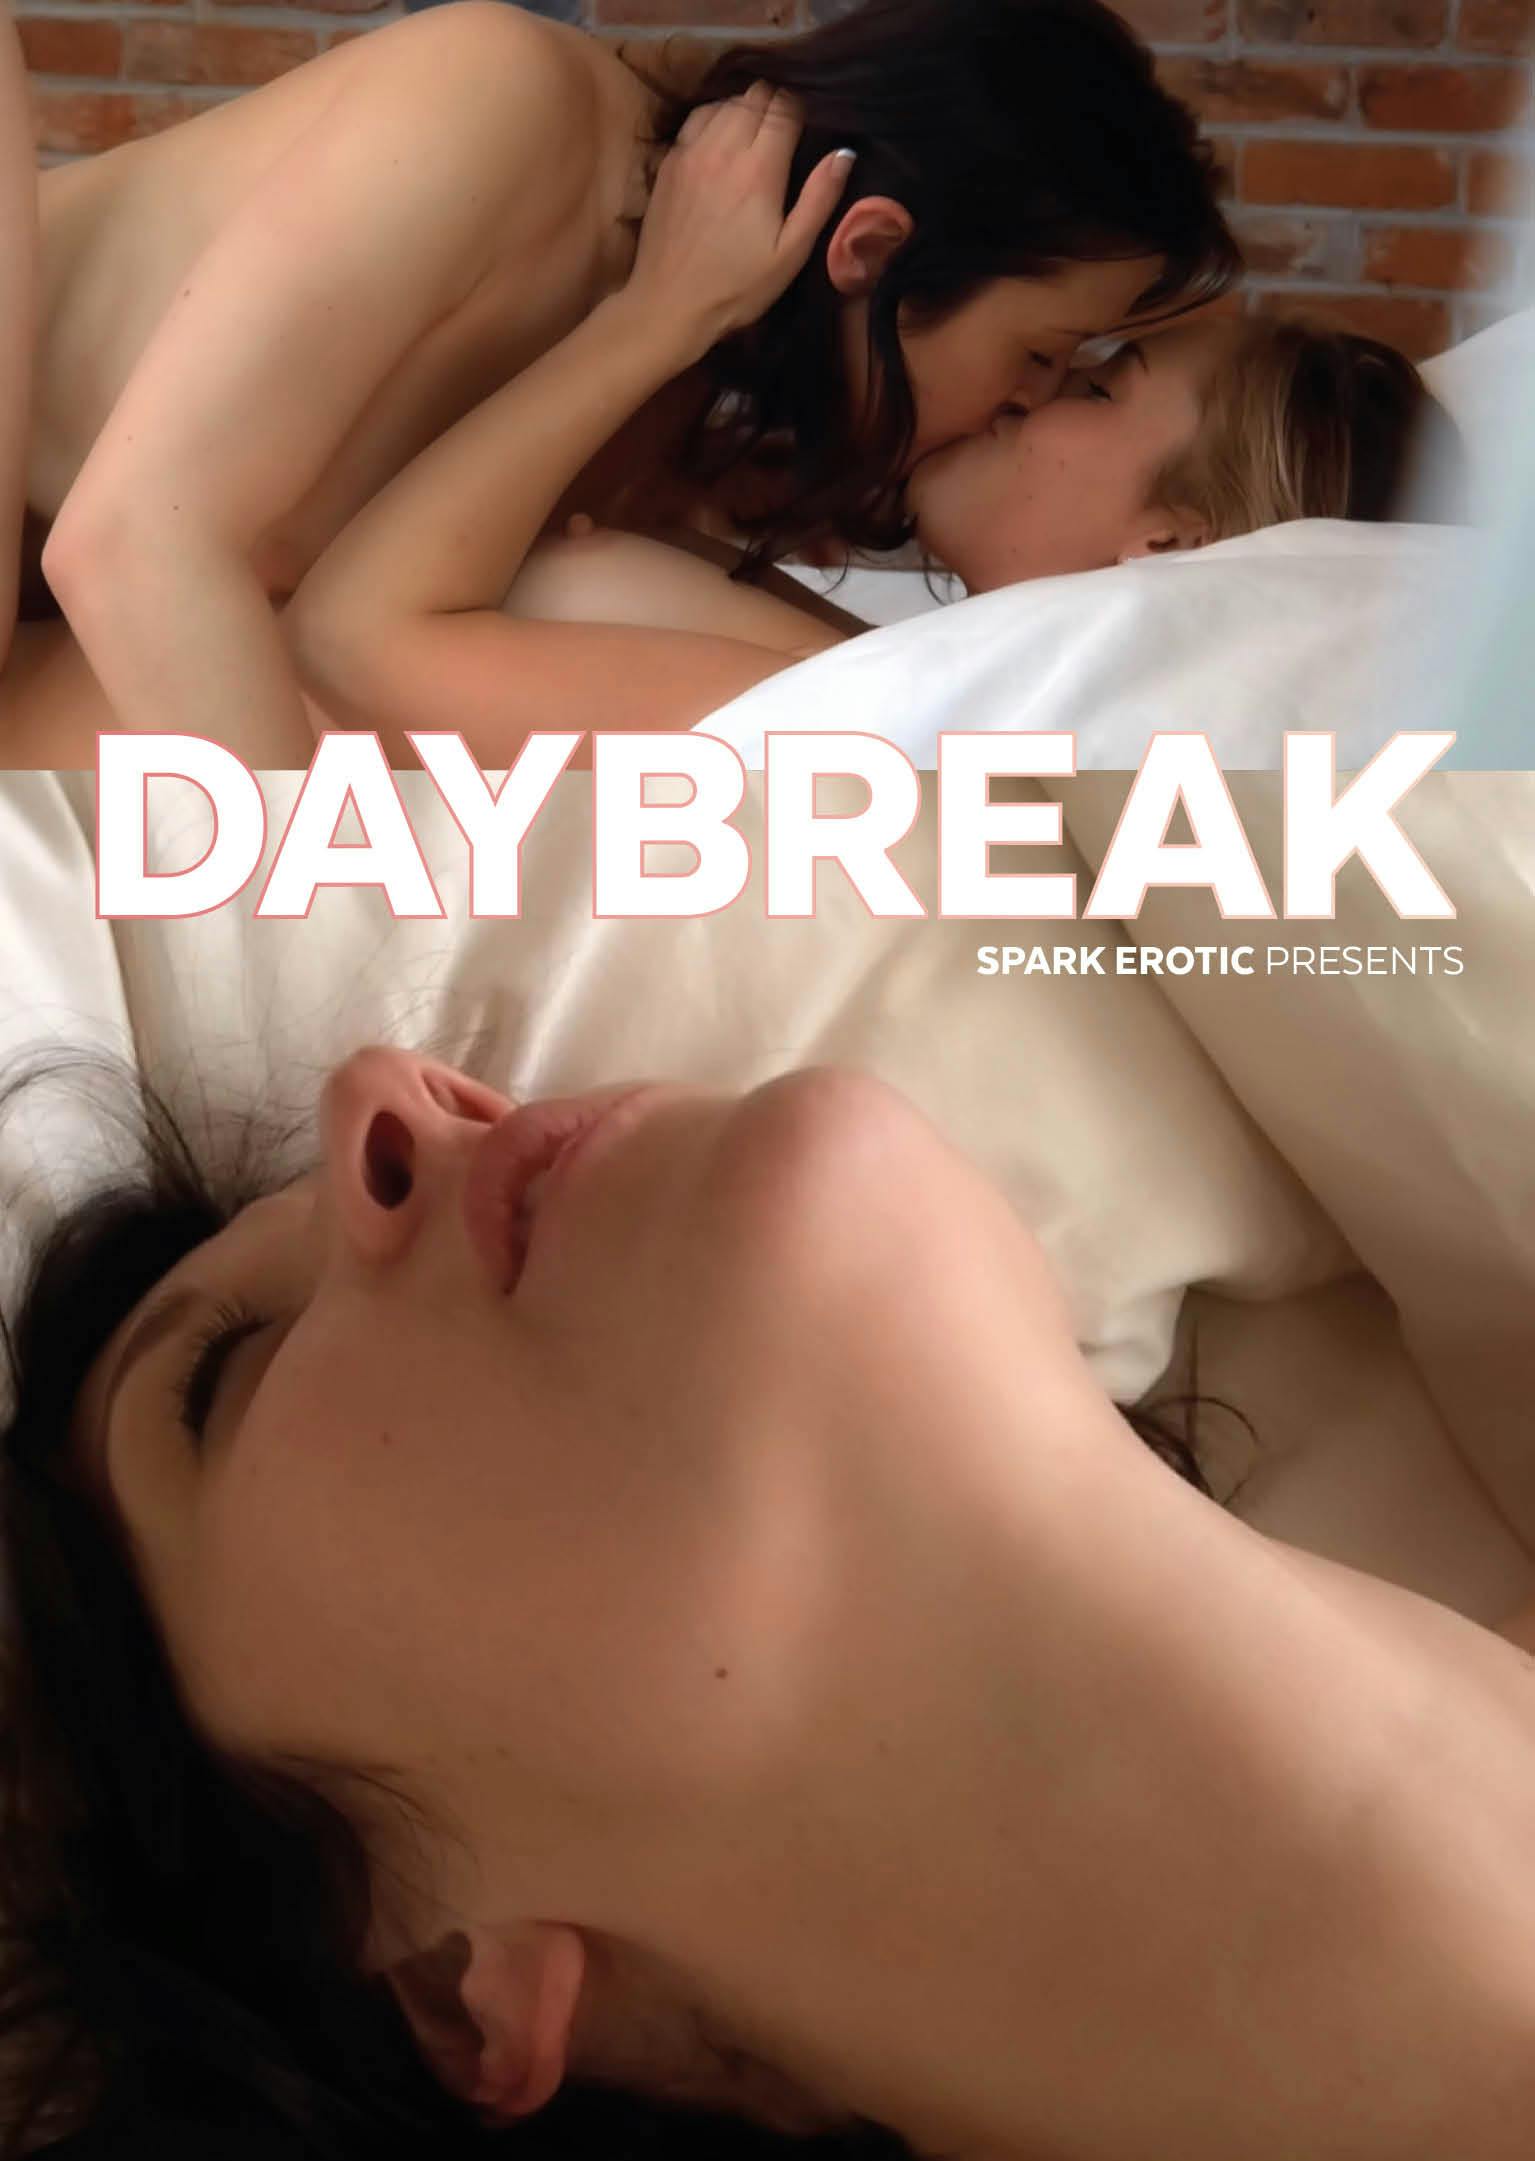 Daybreak full movie by spark erotic